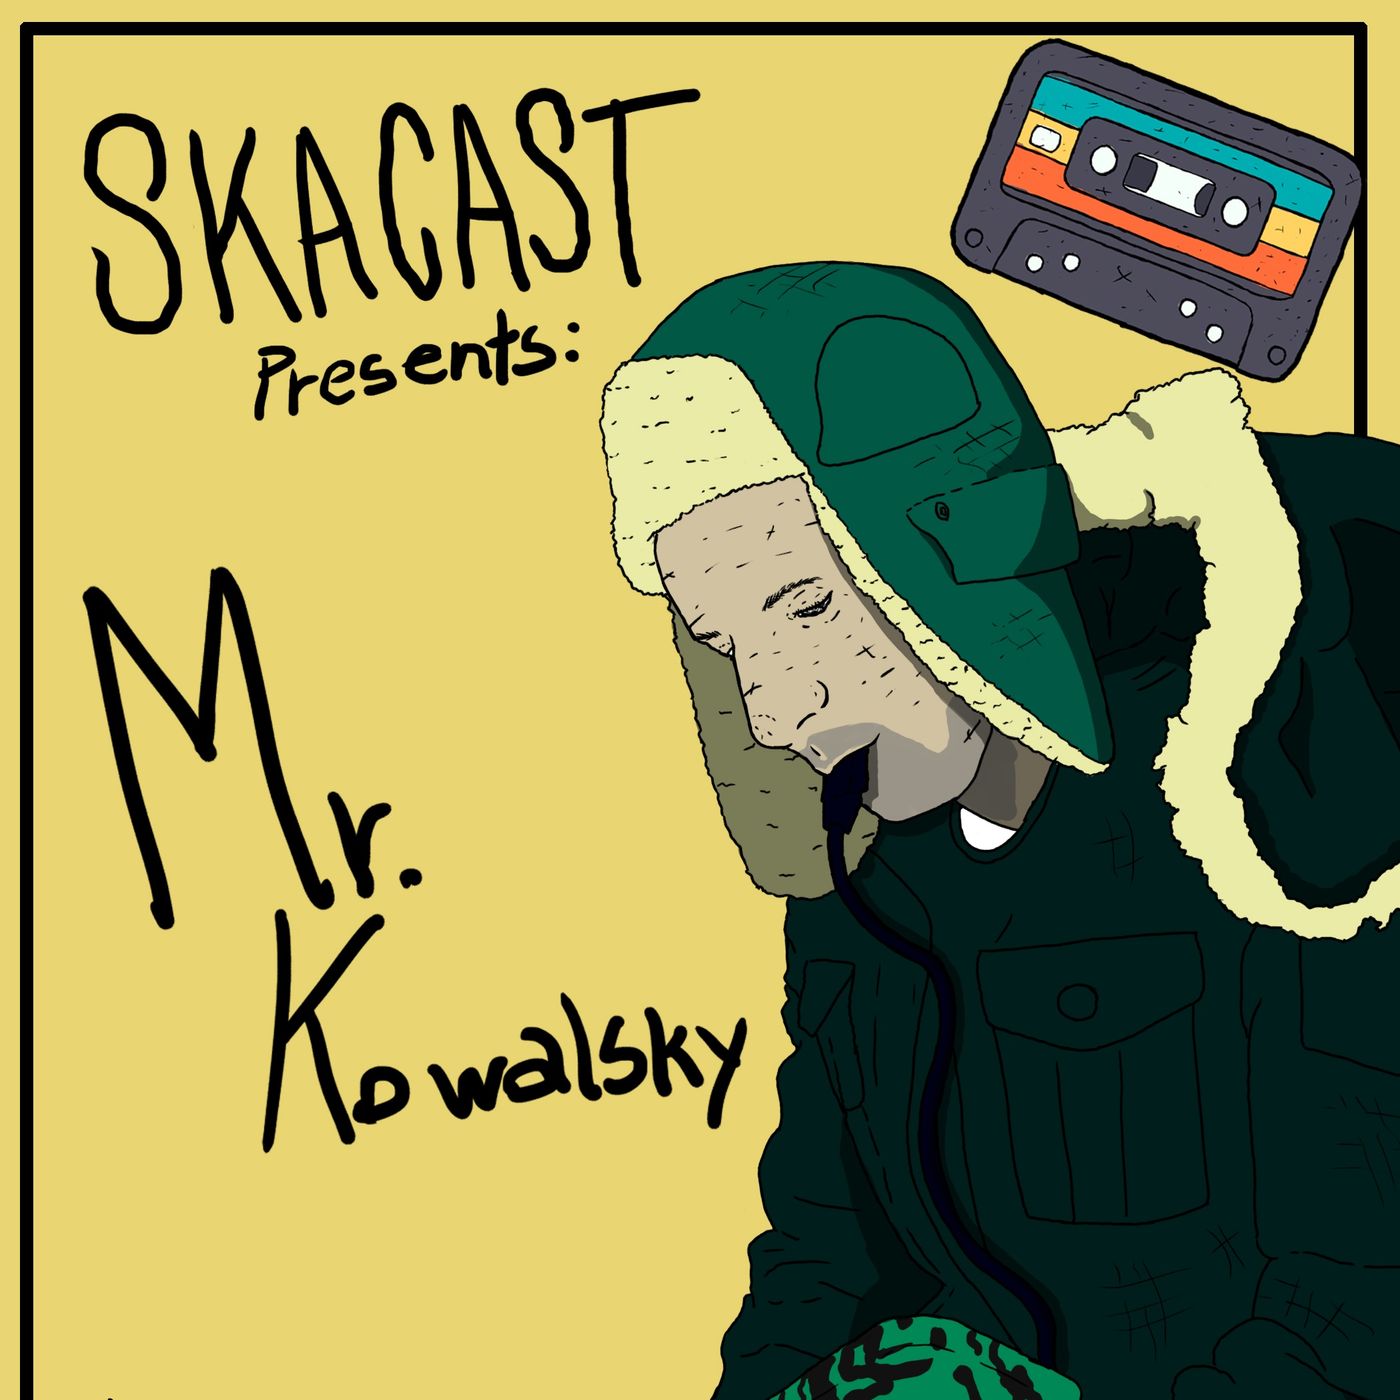 Mr. Kowalsky episode